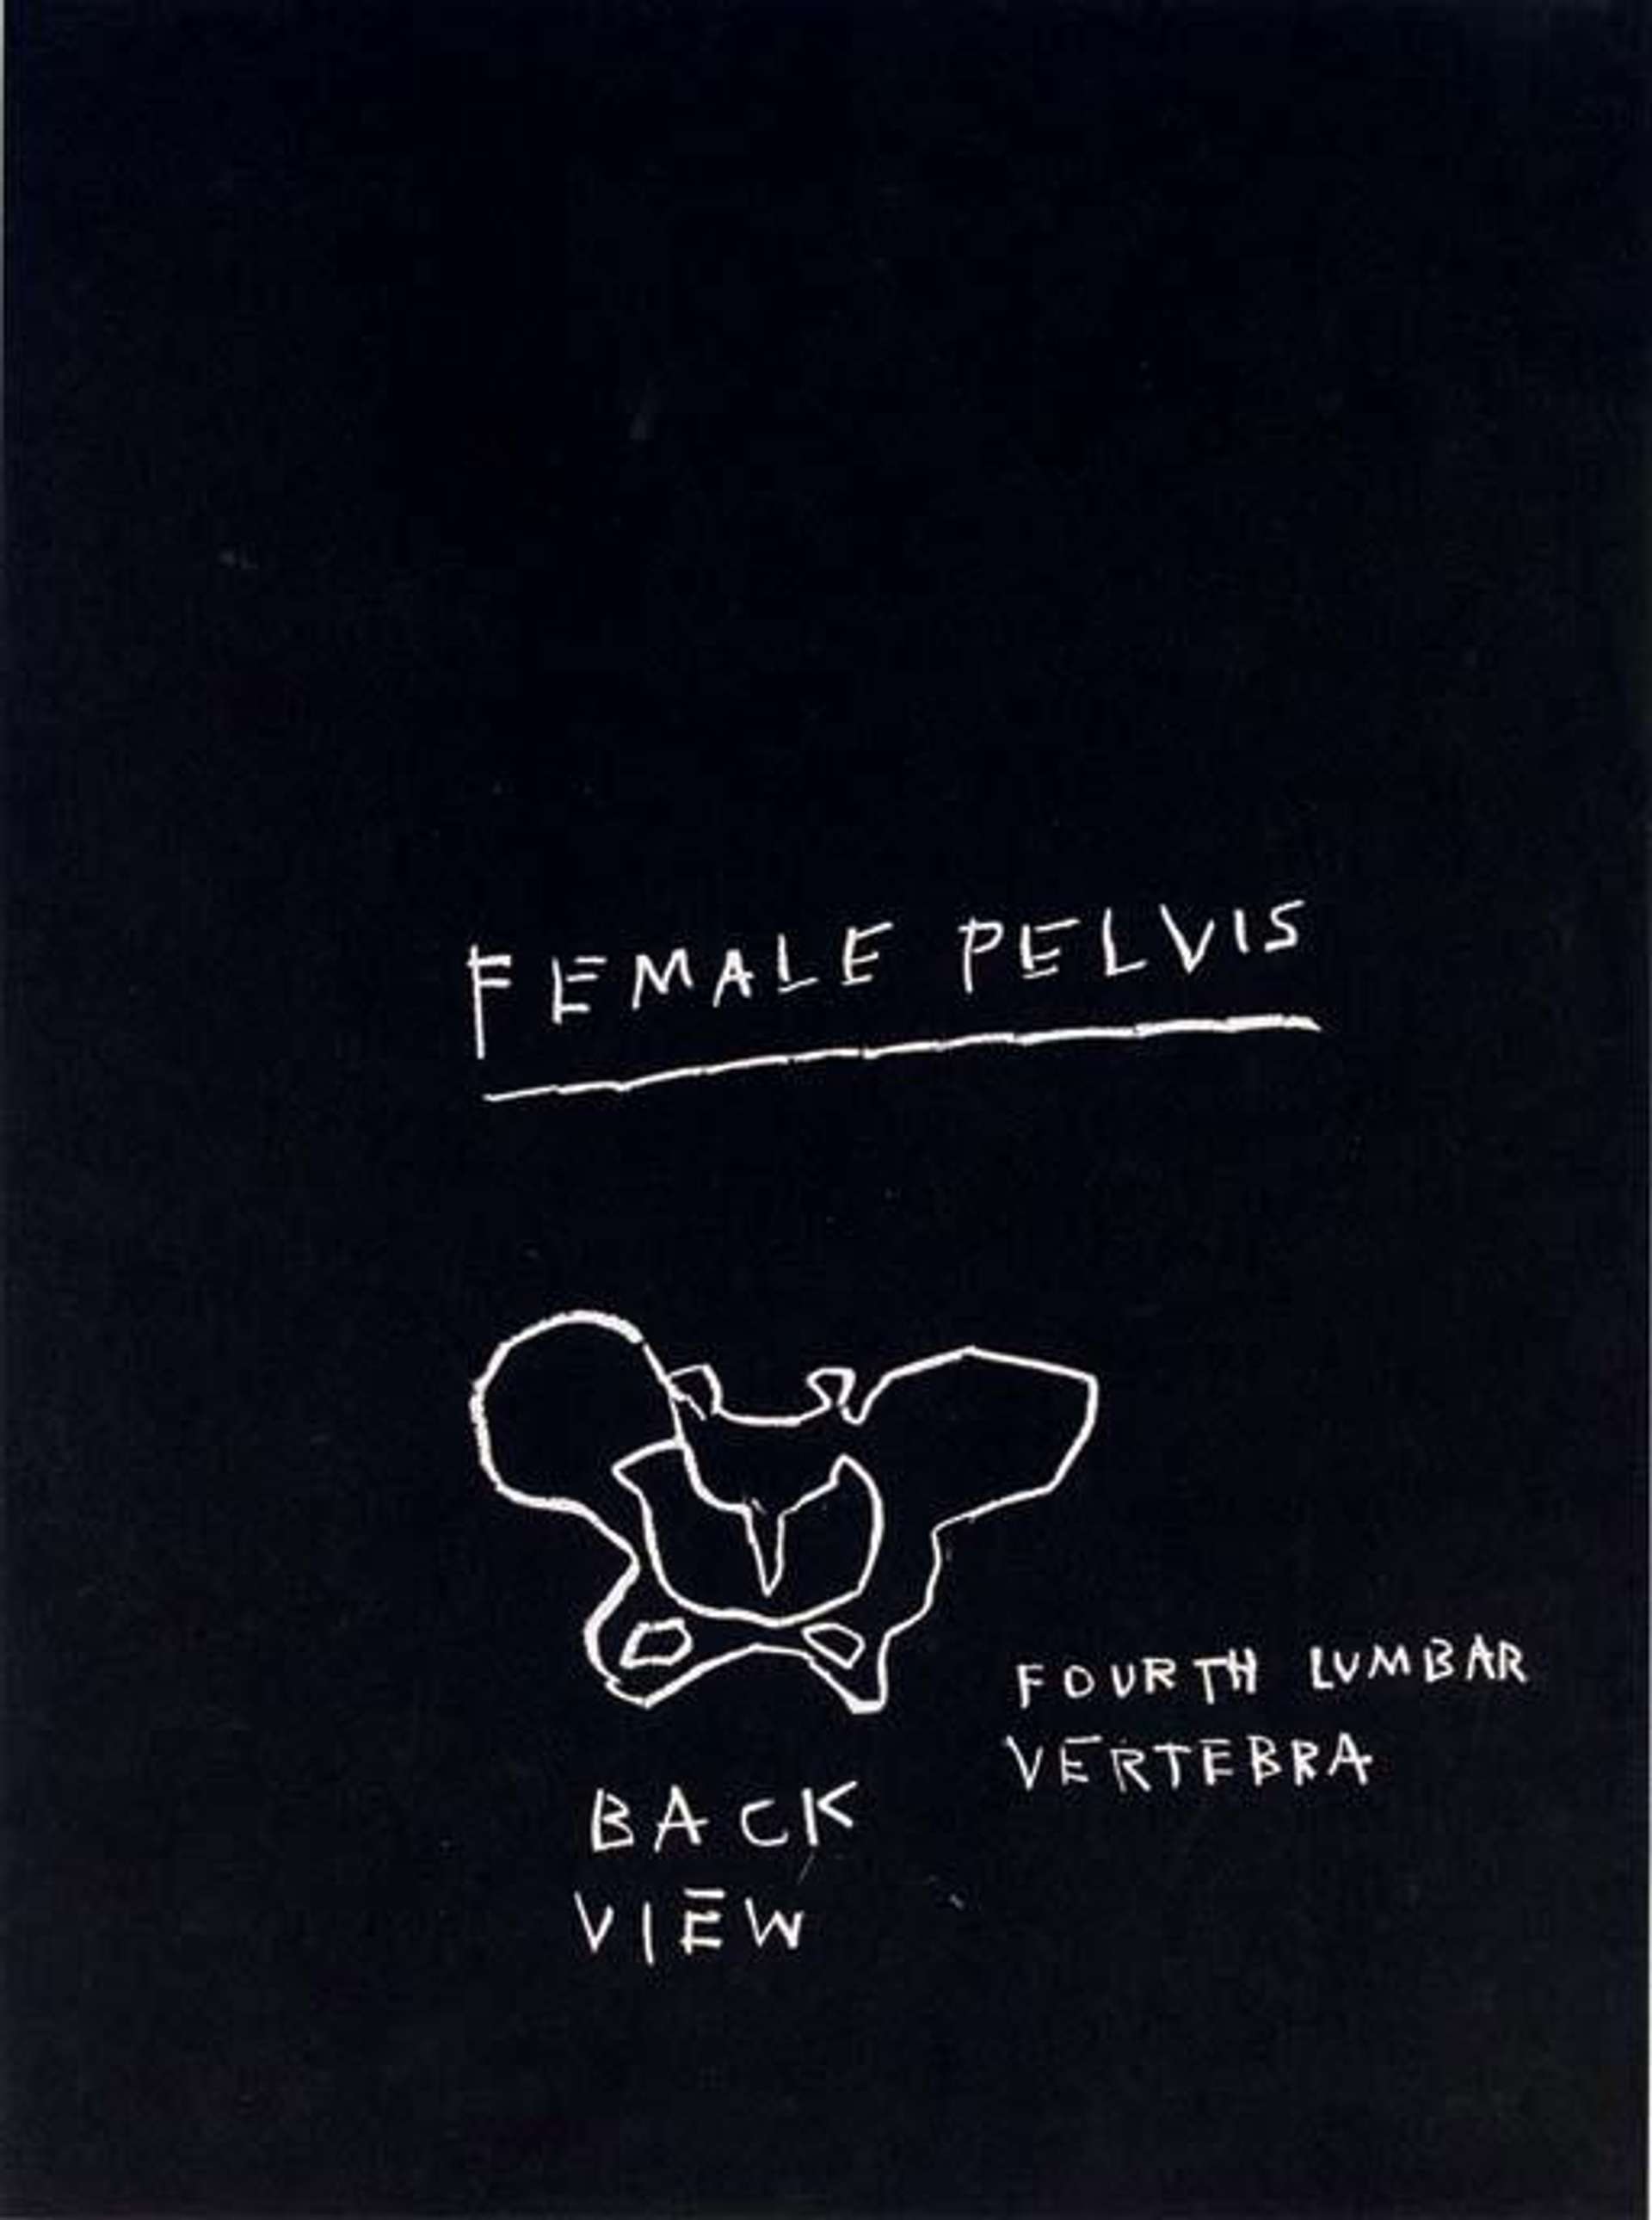 Jean-Michel Basquiat’s Anatomy, Female Pelvis. A black screenprint featuring white anatomical drawings of a human female pelvis with descriptive labels.